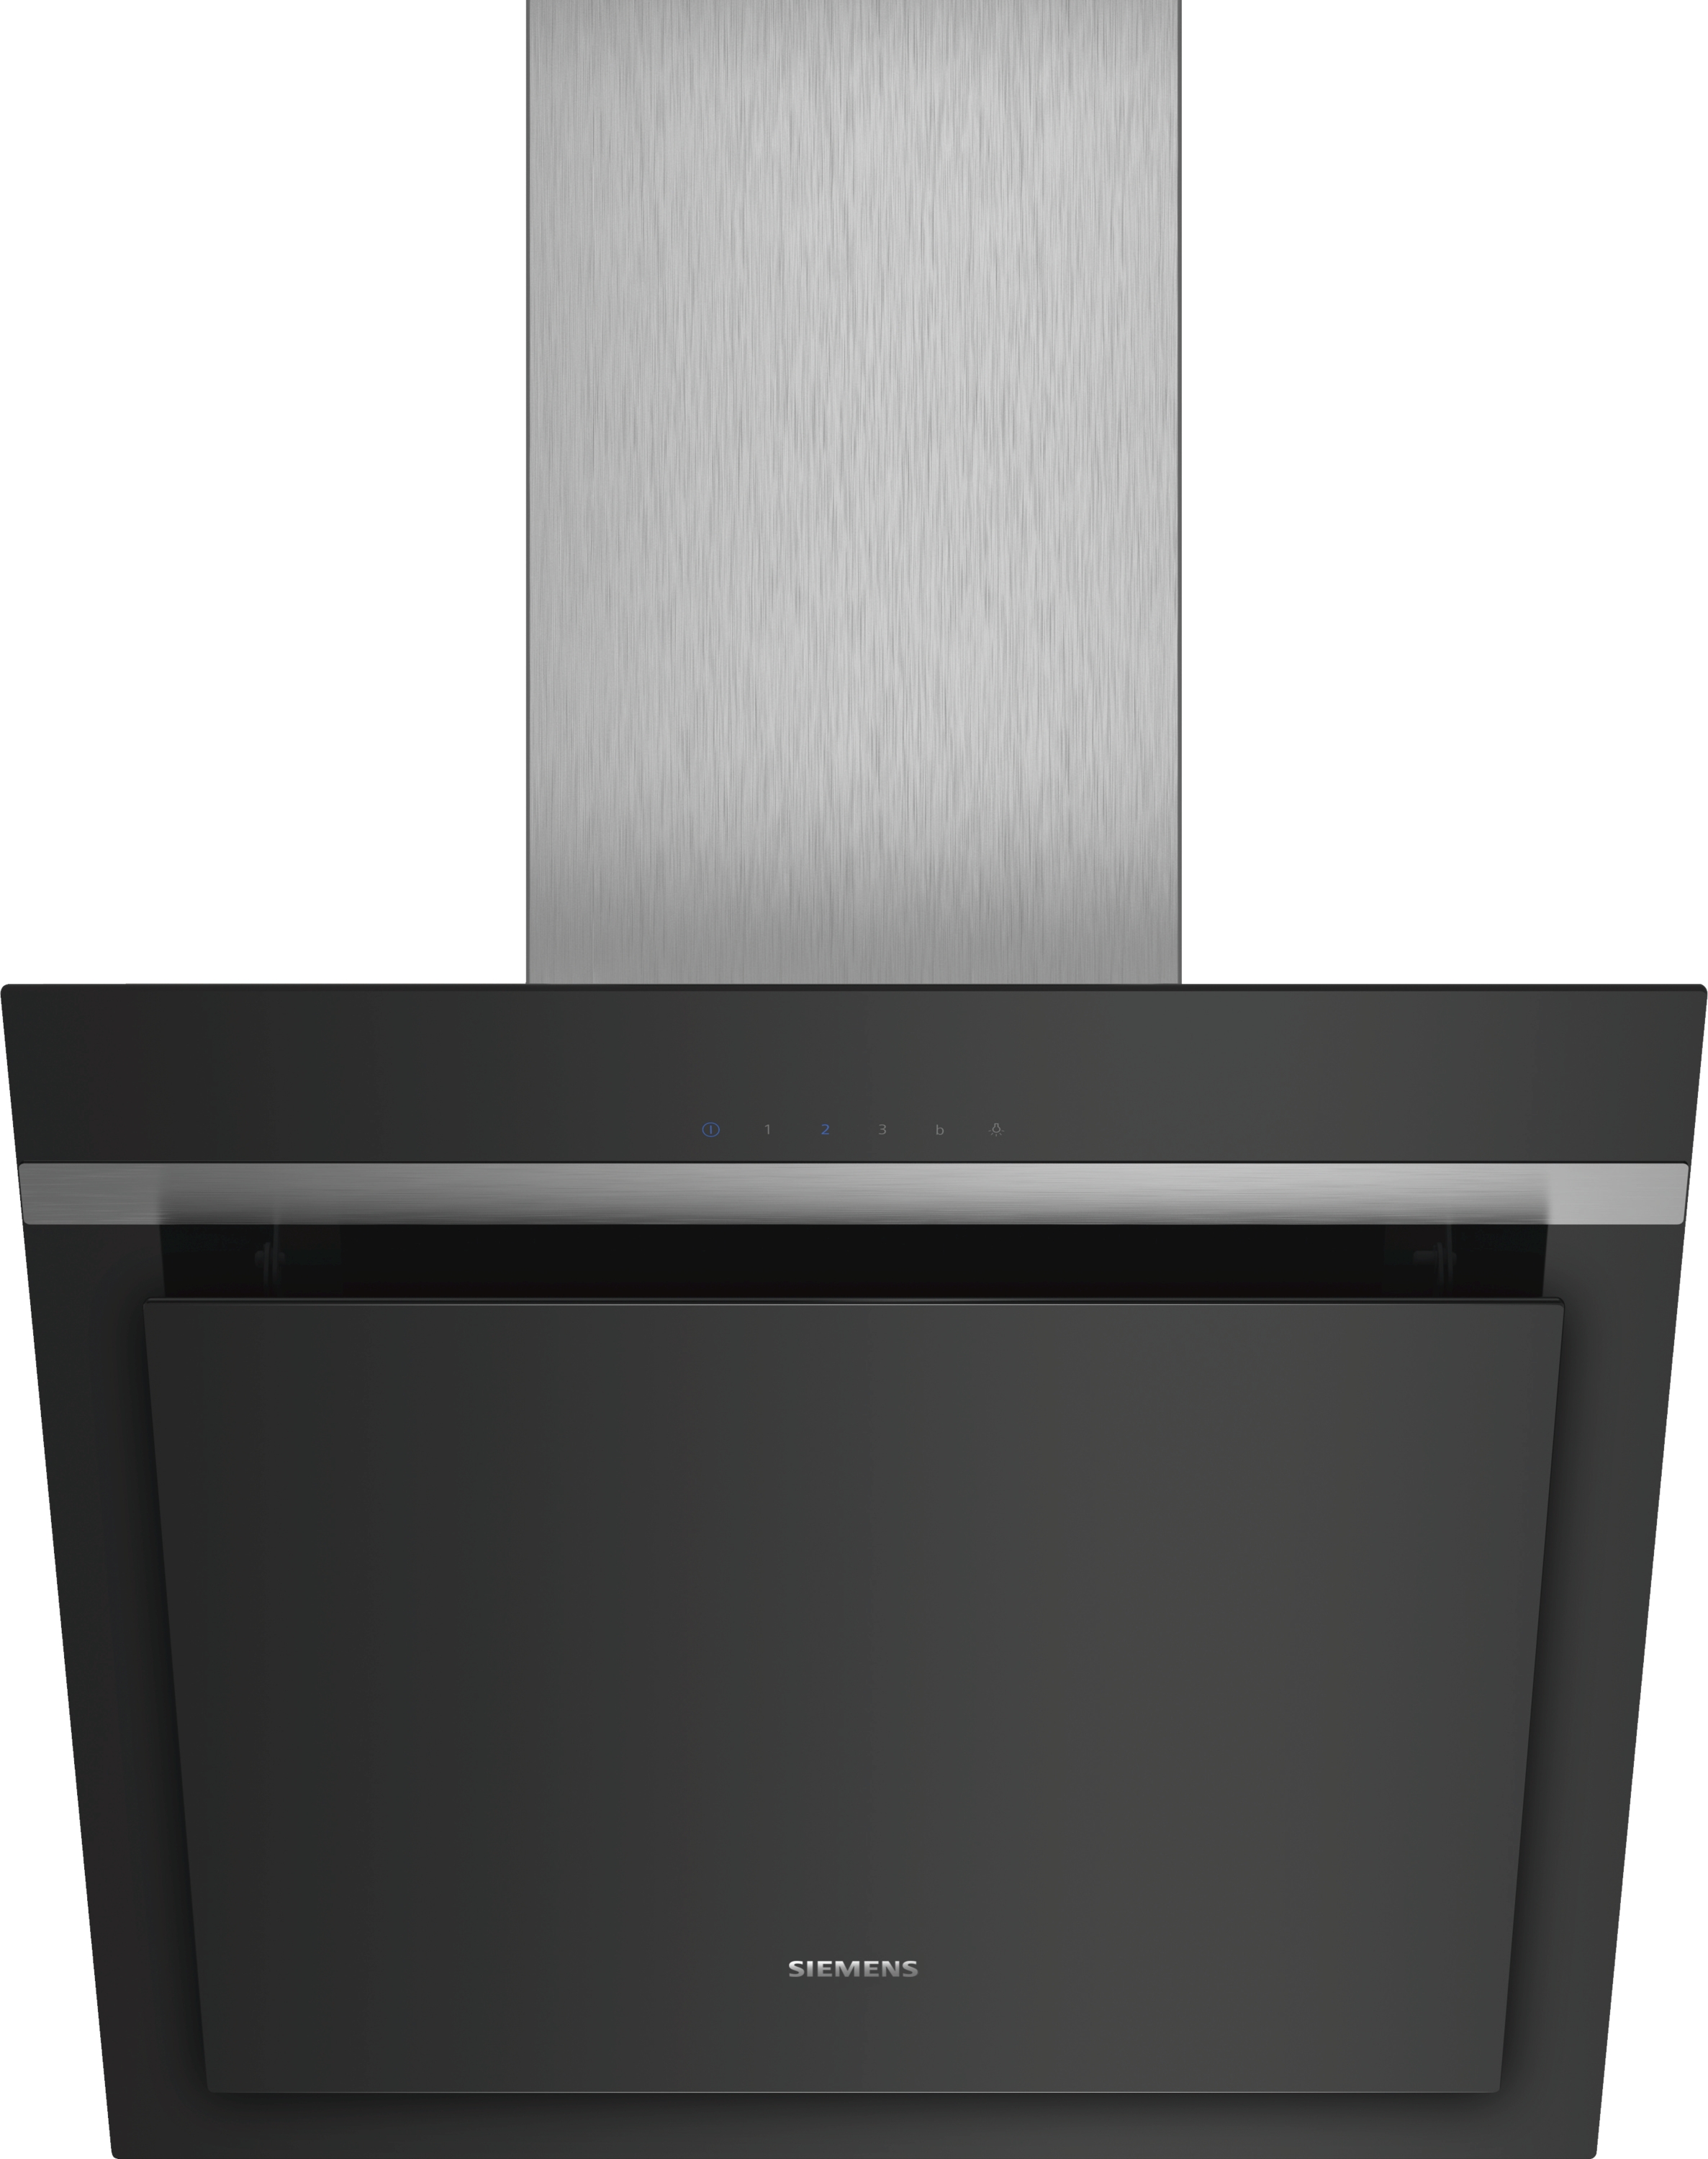 Siemens iQ300, Wandesse, 60 cm, Klarglas schwarz bedruckt, LC67KHM60